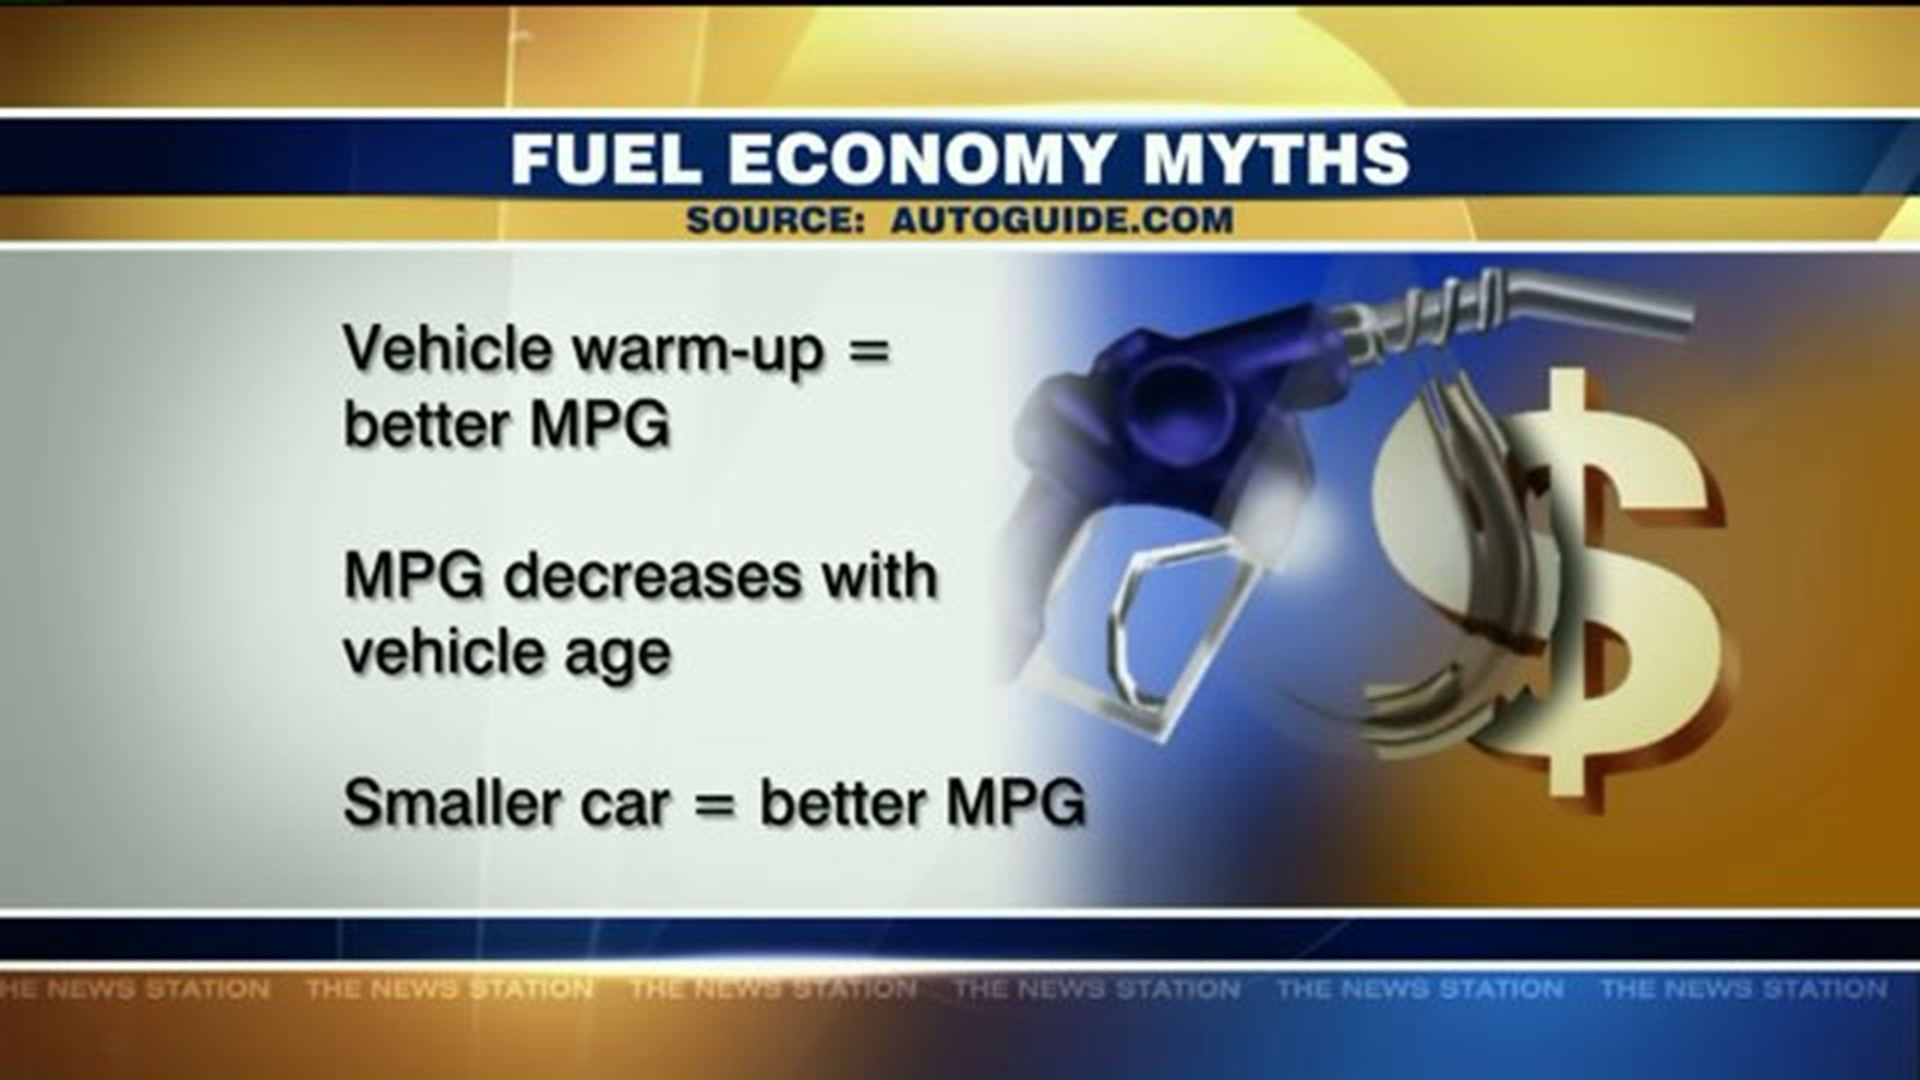 Debunking Fuel Economy Myths 1 through 3